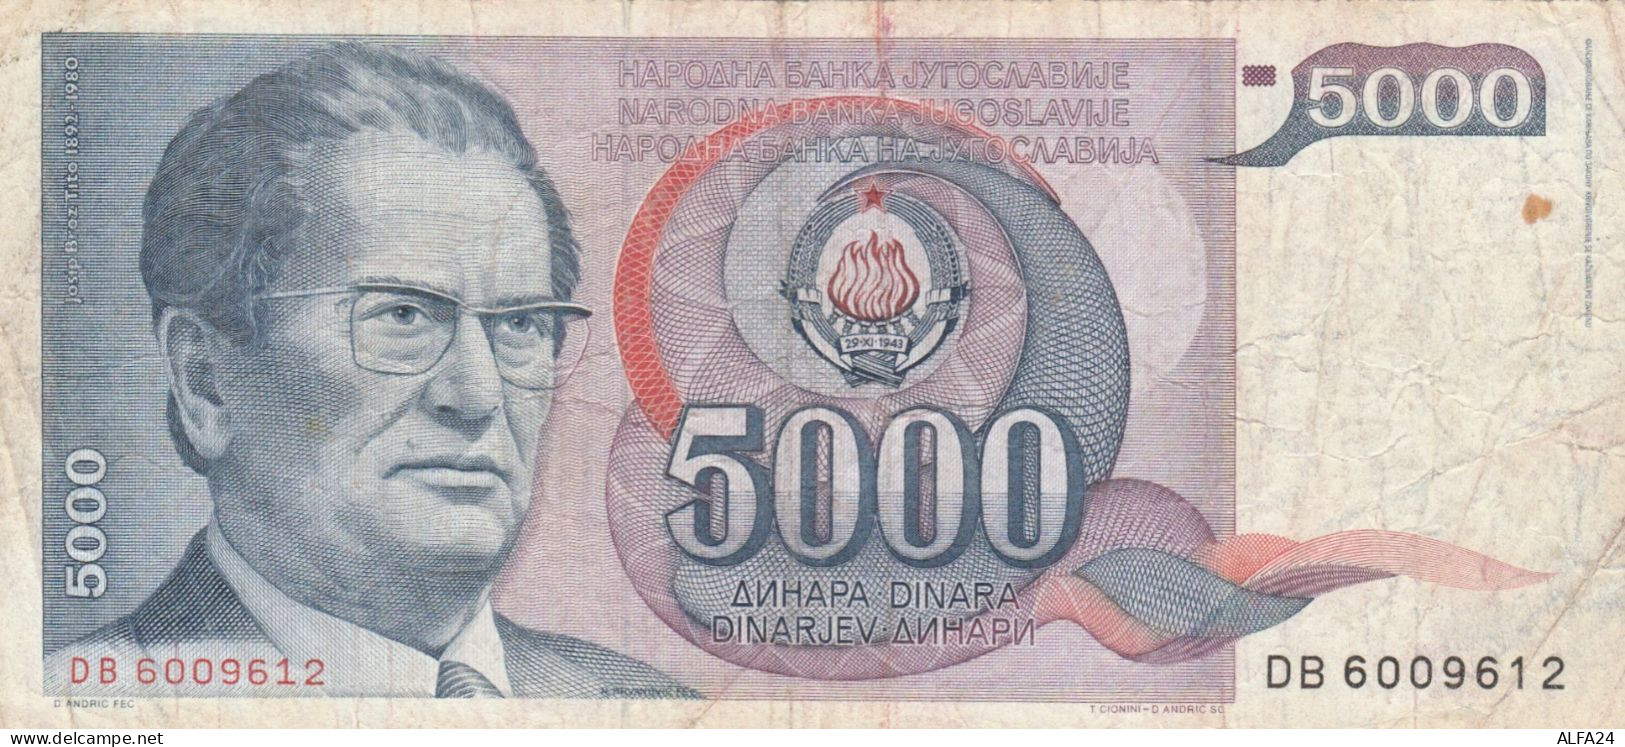 BANCONOTA JUGOSLAVIA 5000 VF (HB971 - Yougoslavie